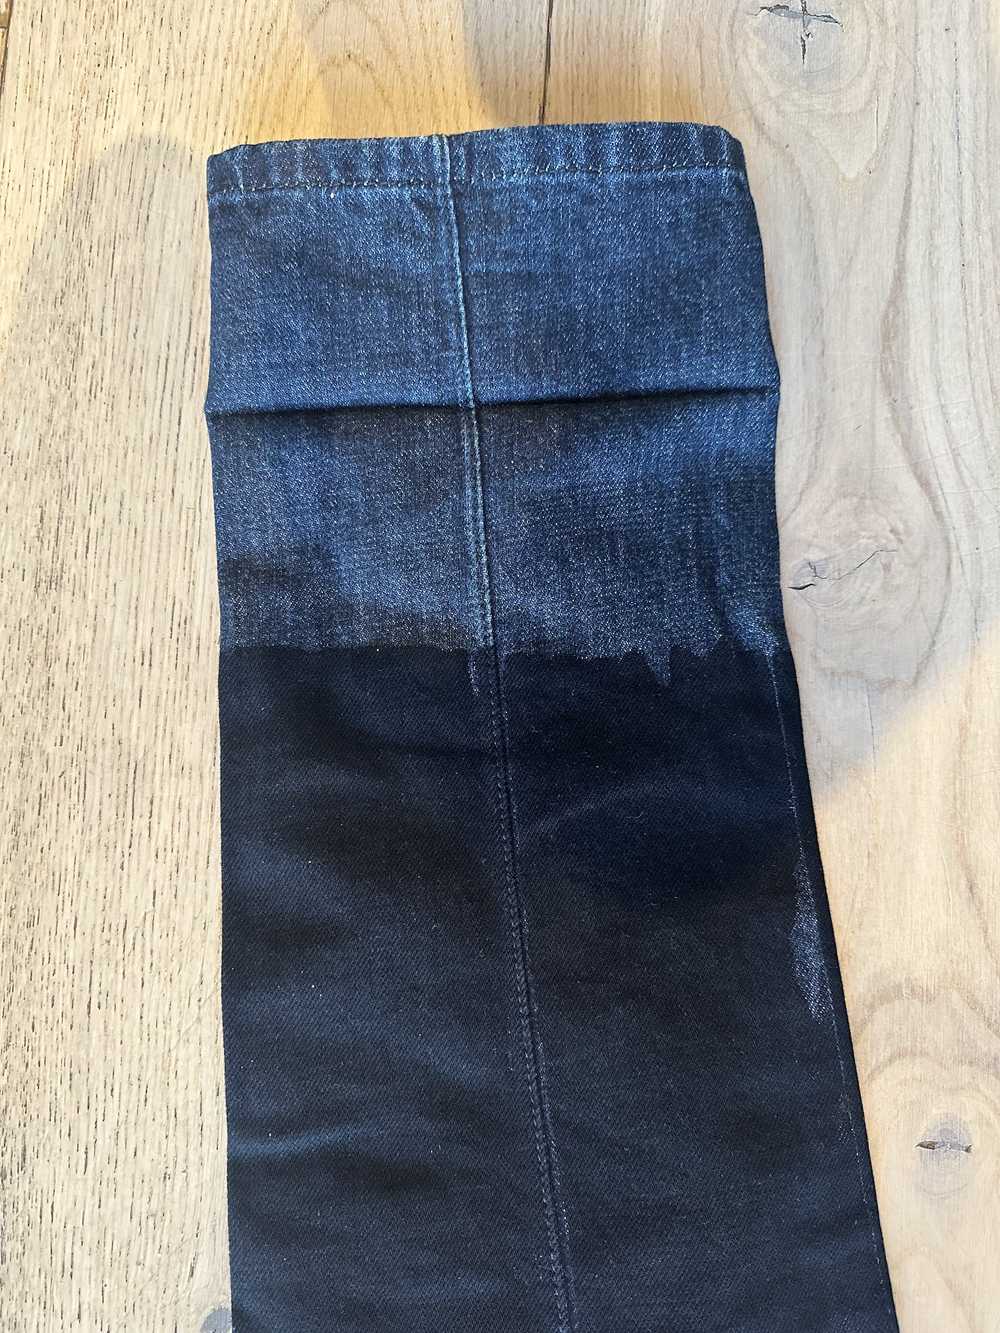 Prada Prada Over dyed slim fit jeans - image 6